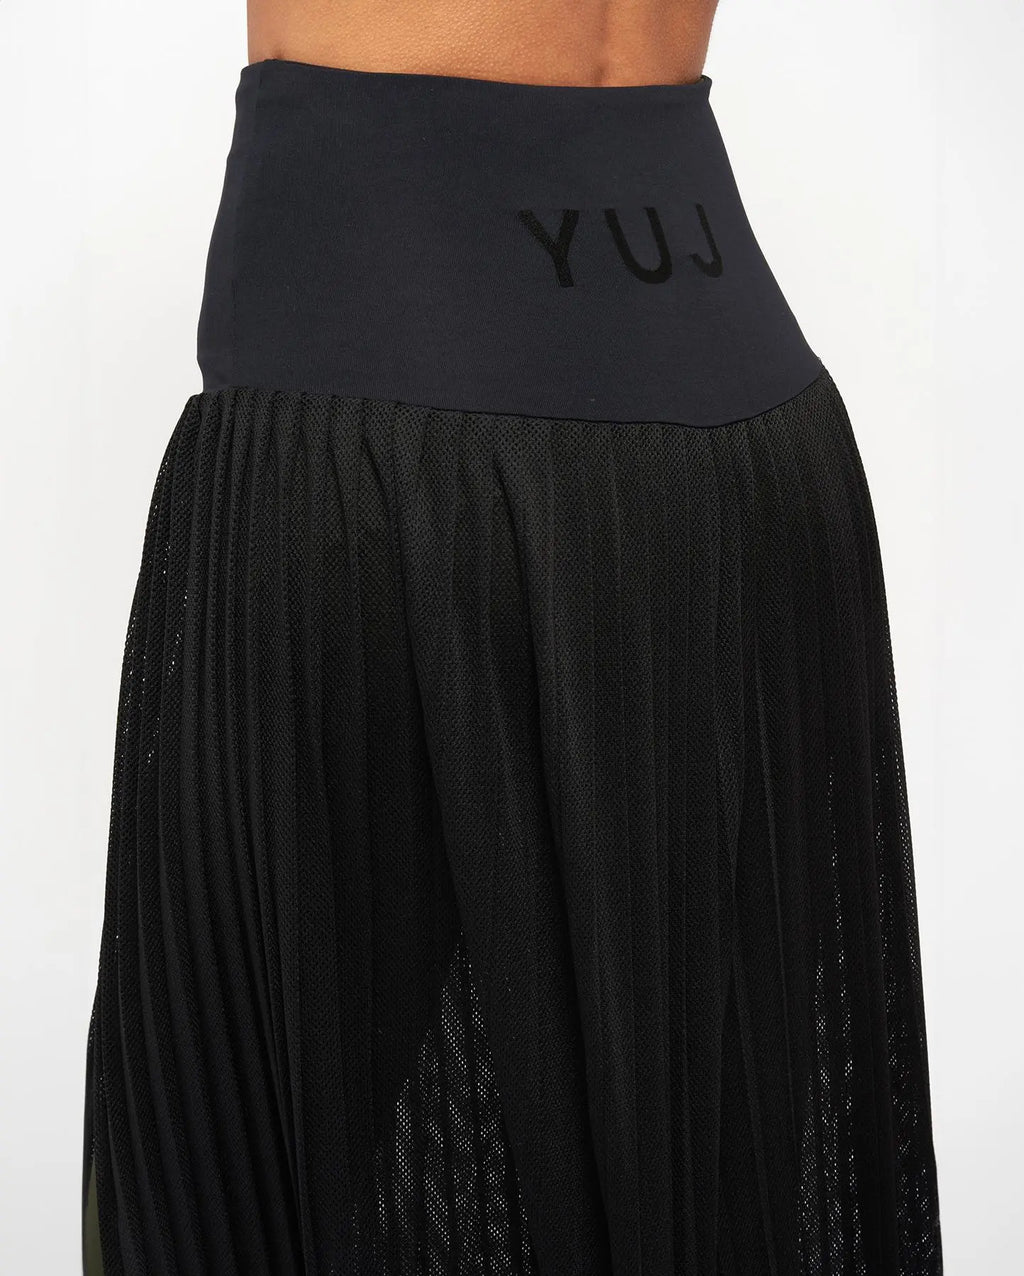 Yoga skirt CITYSKIRT SHAPE - YUJ Paris Store